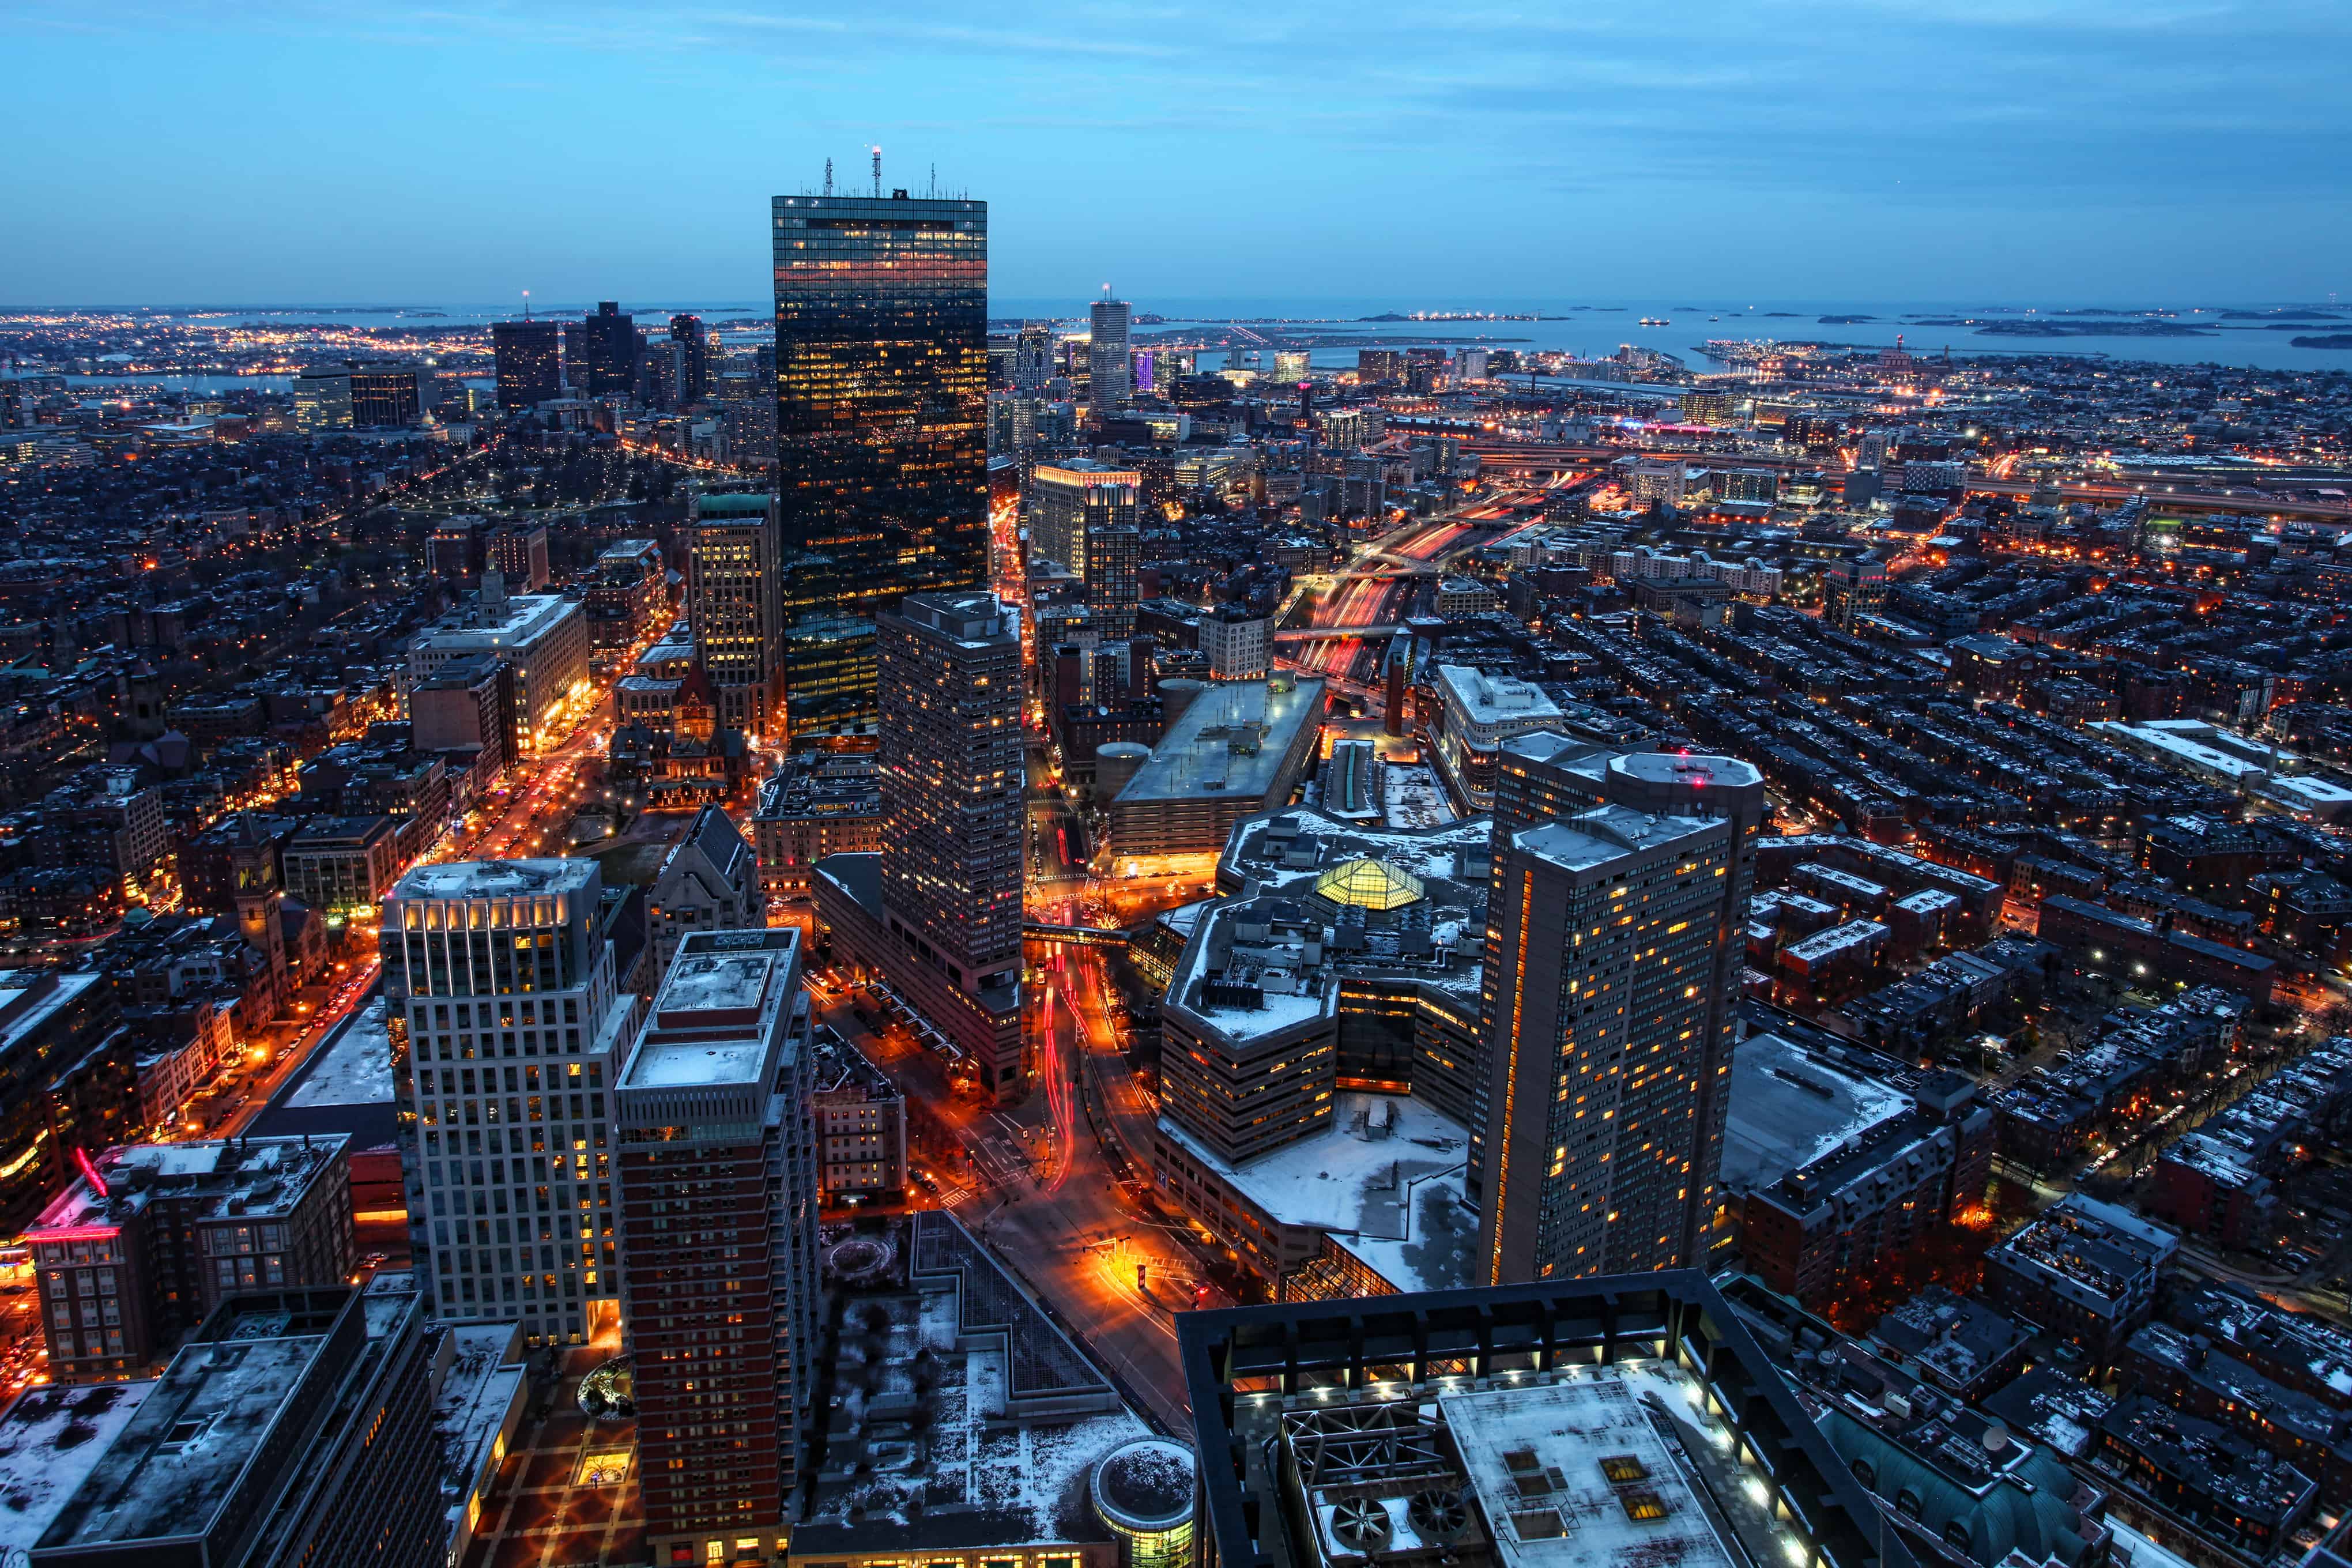 An aerial night view of Boston city center, Massachusetts | Vibration